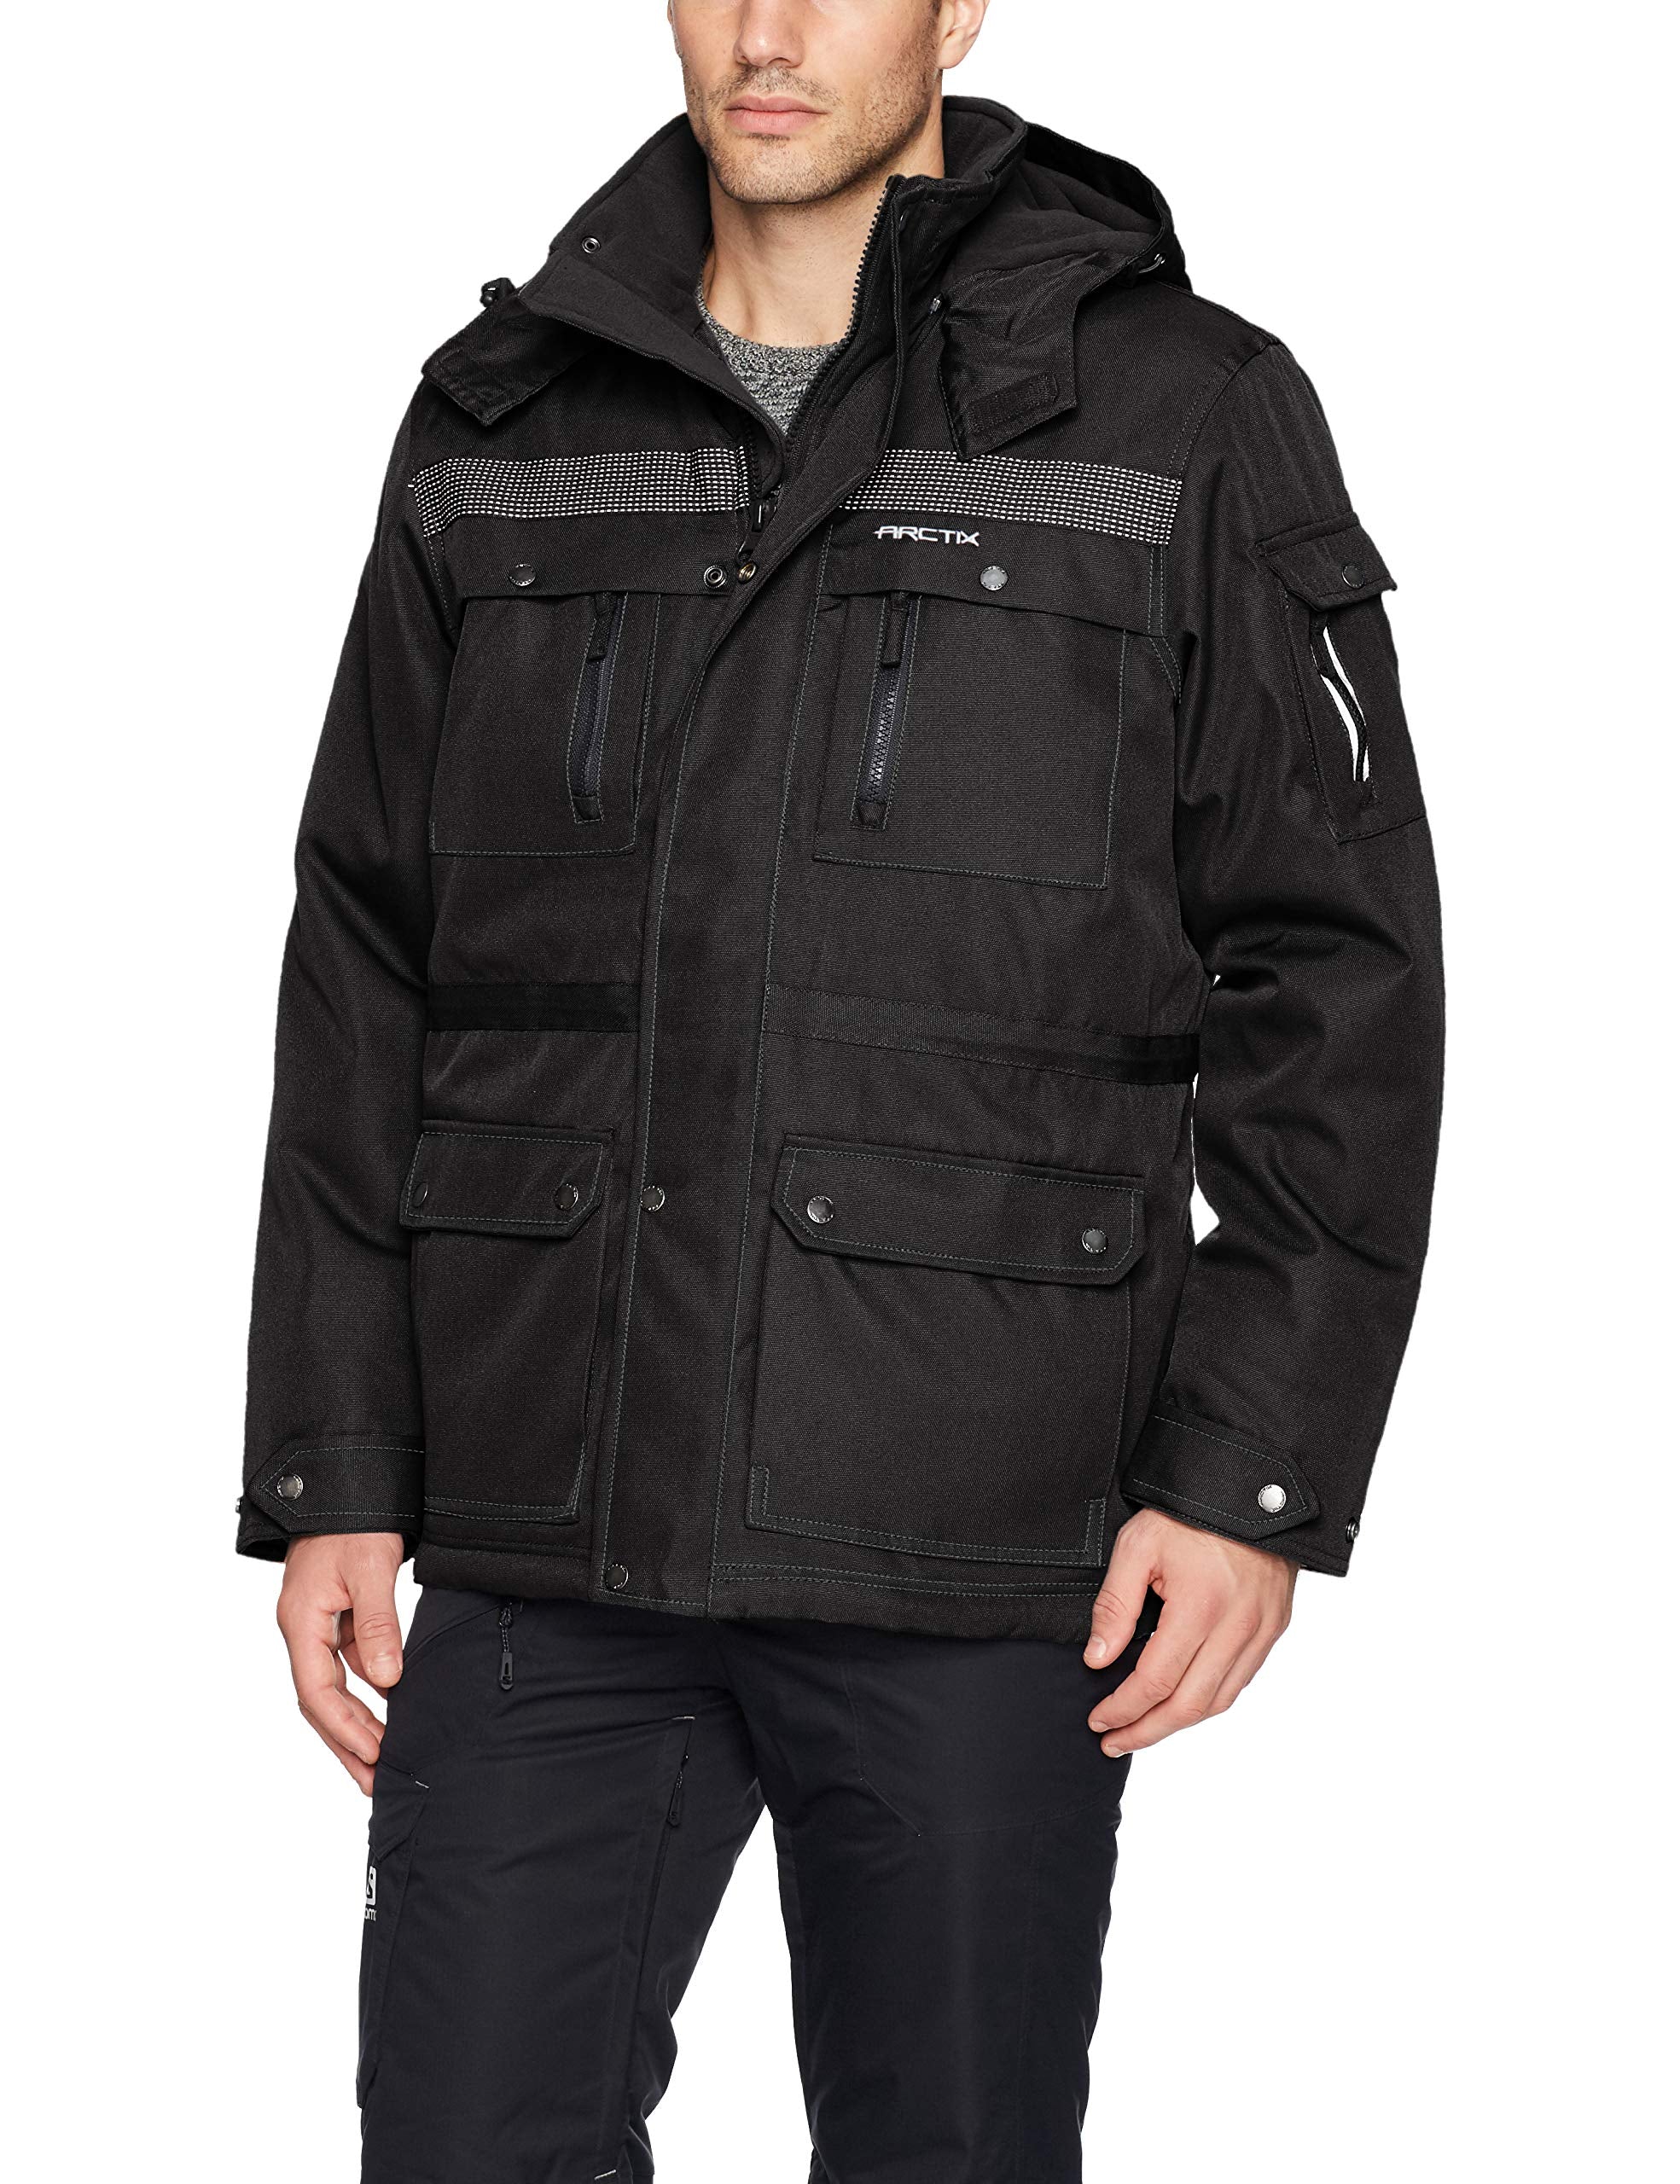 Arctix Tundra Jacket Prices Clearance